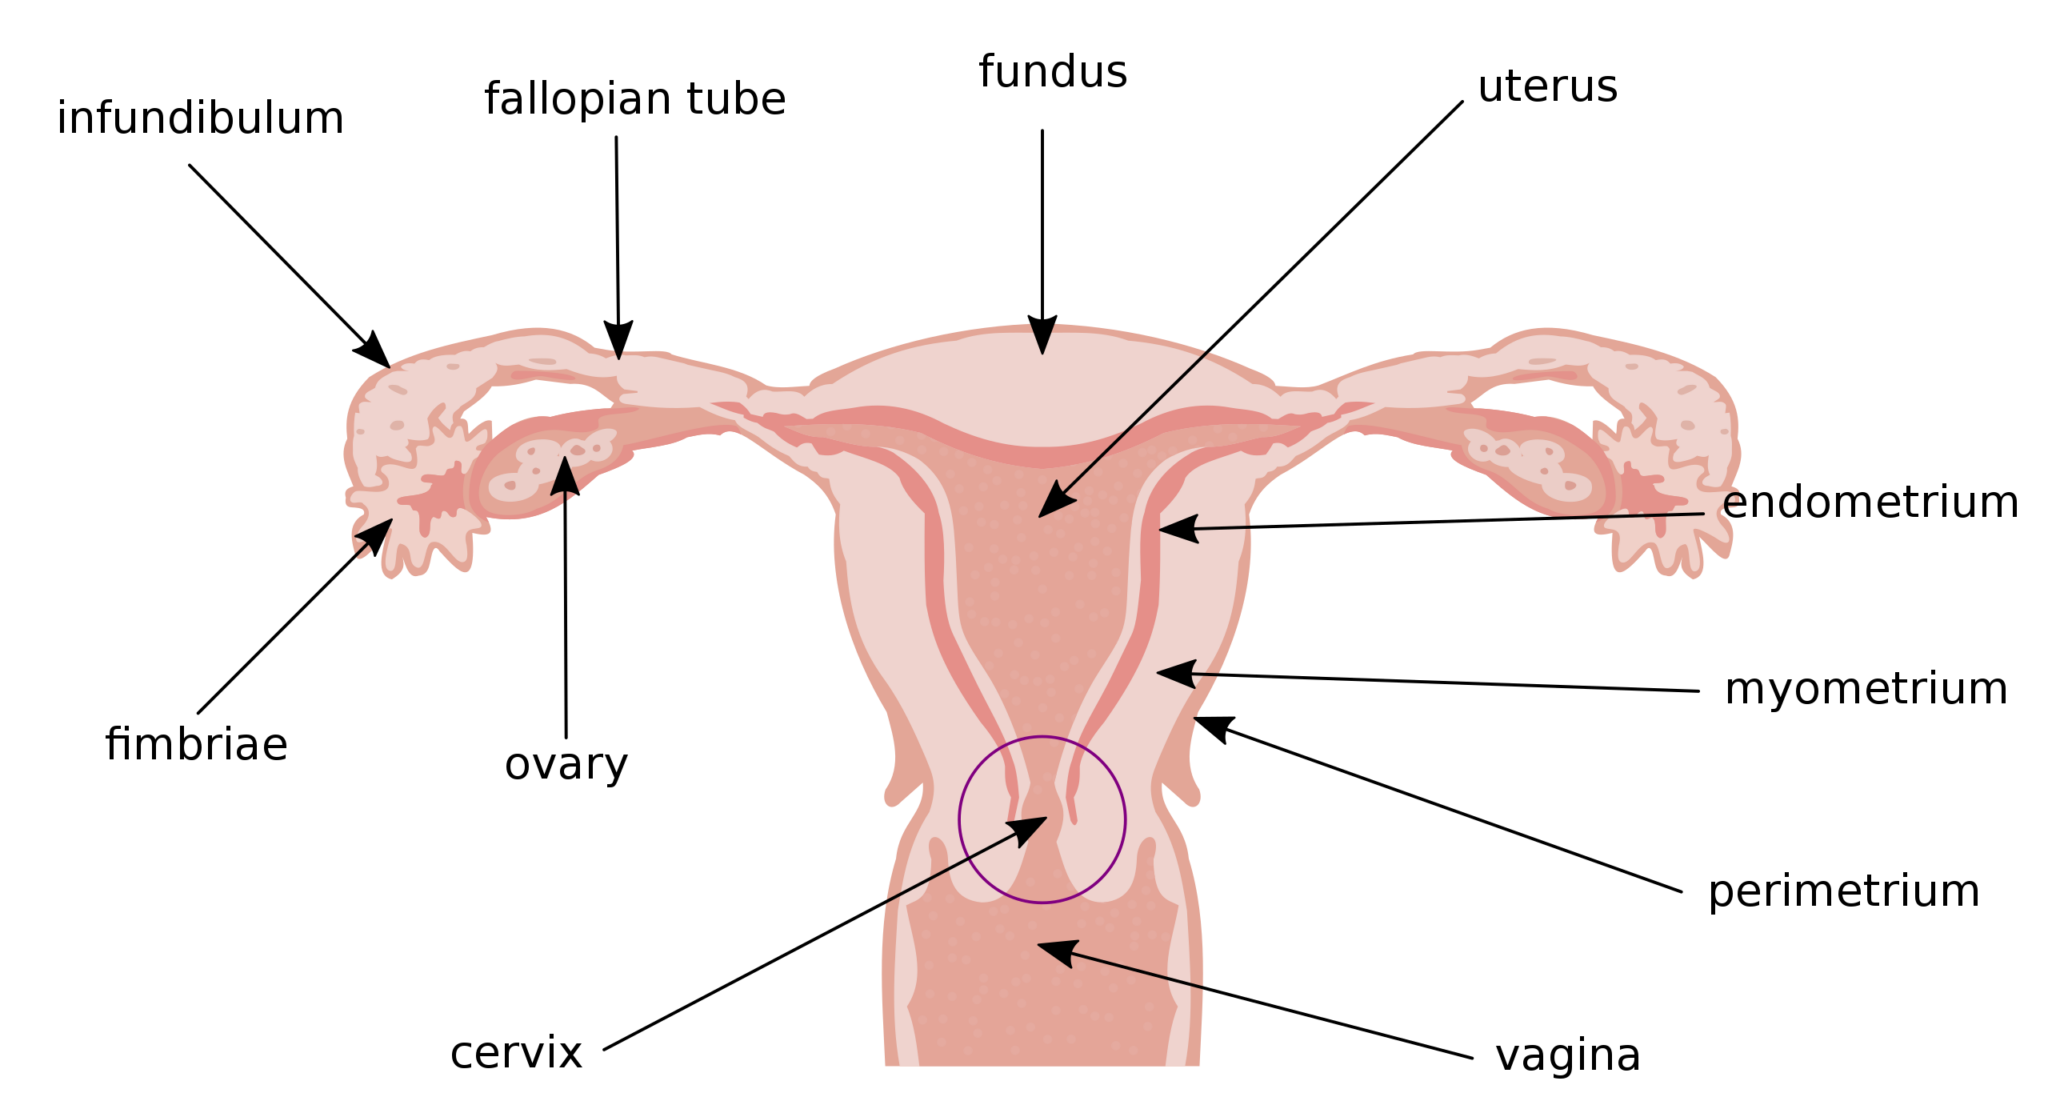 Diagram of the anatomy of the uterus